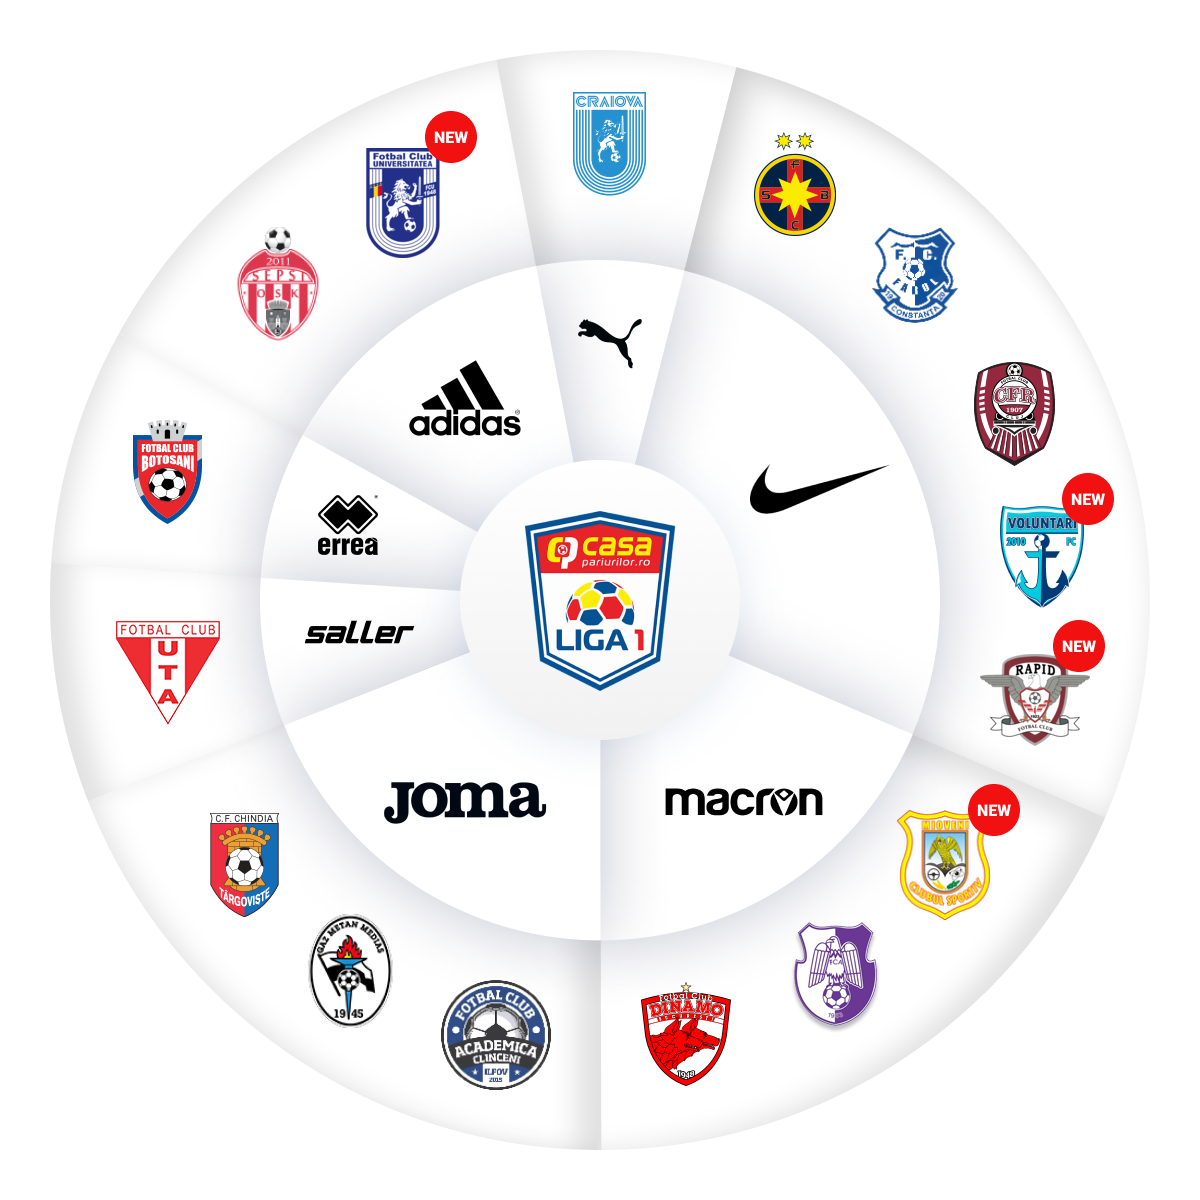 Overview of the 2020/2021 La Liga sponsors